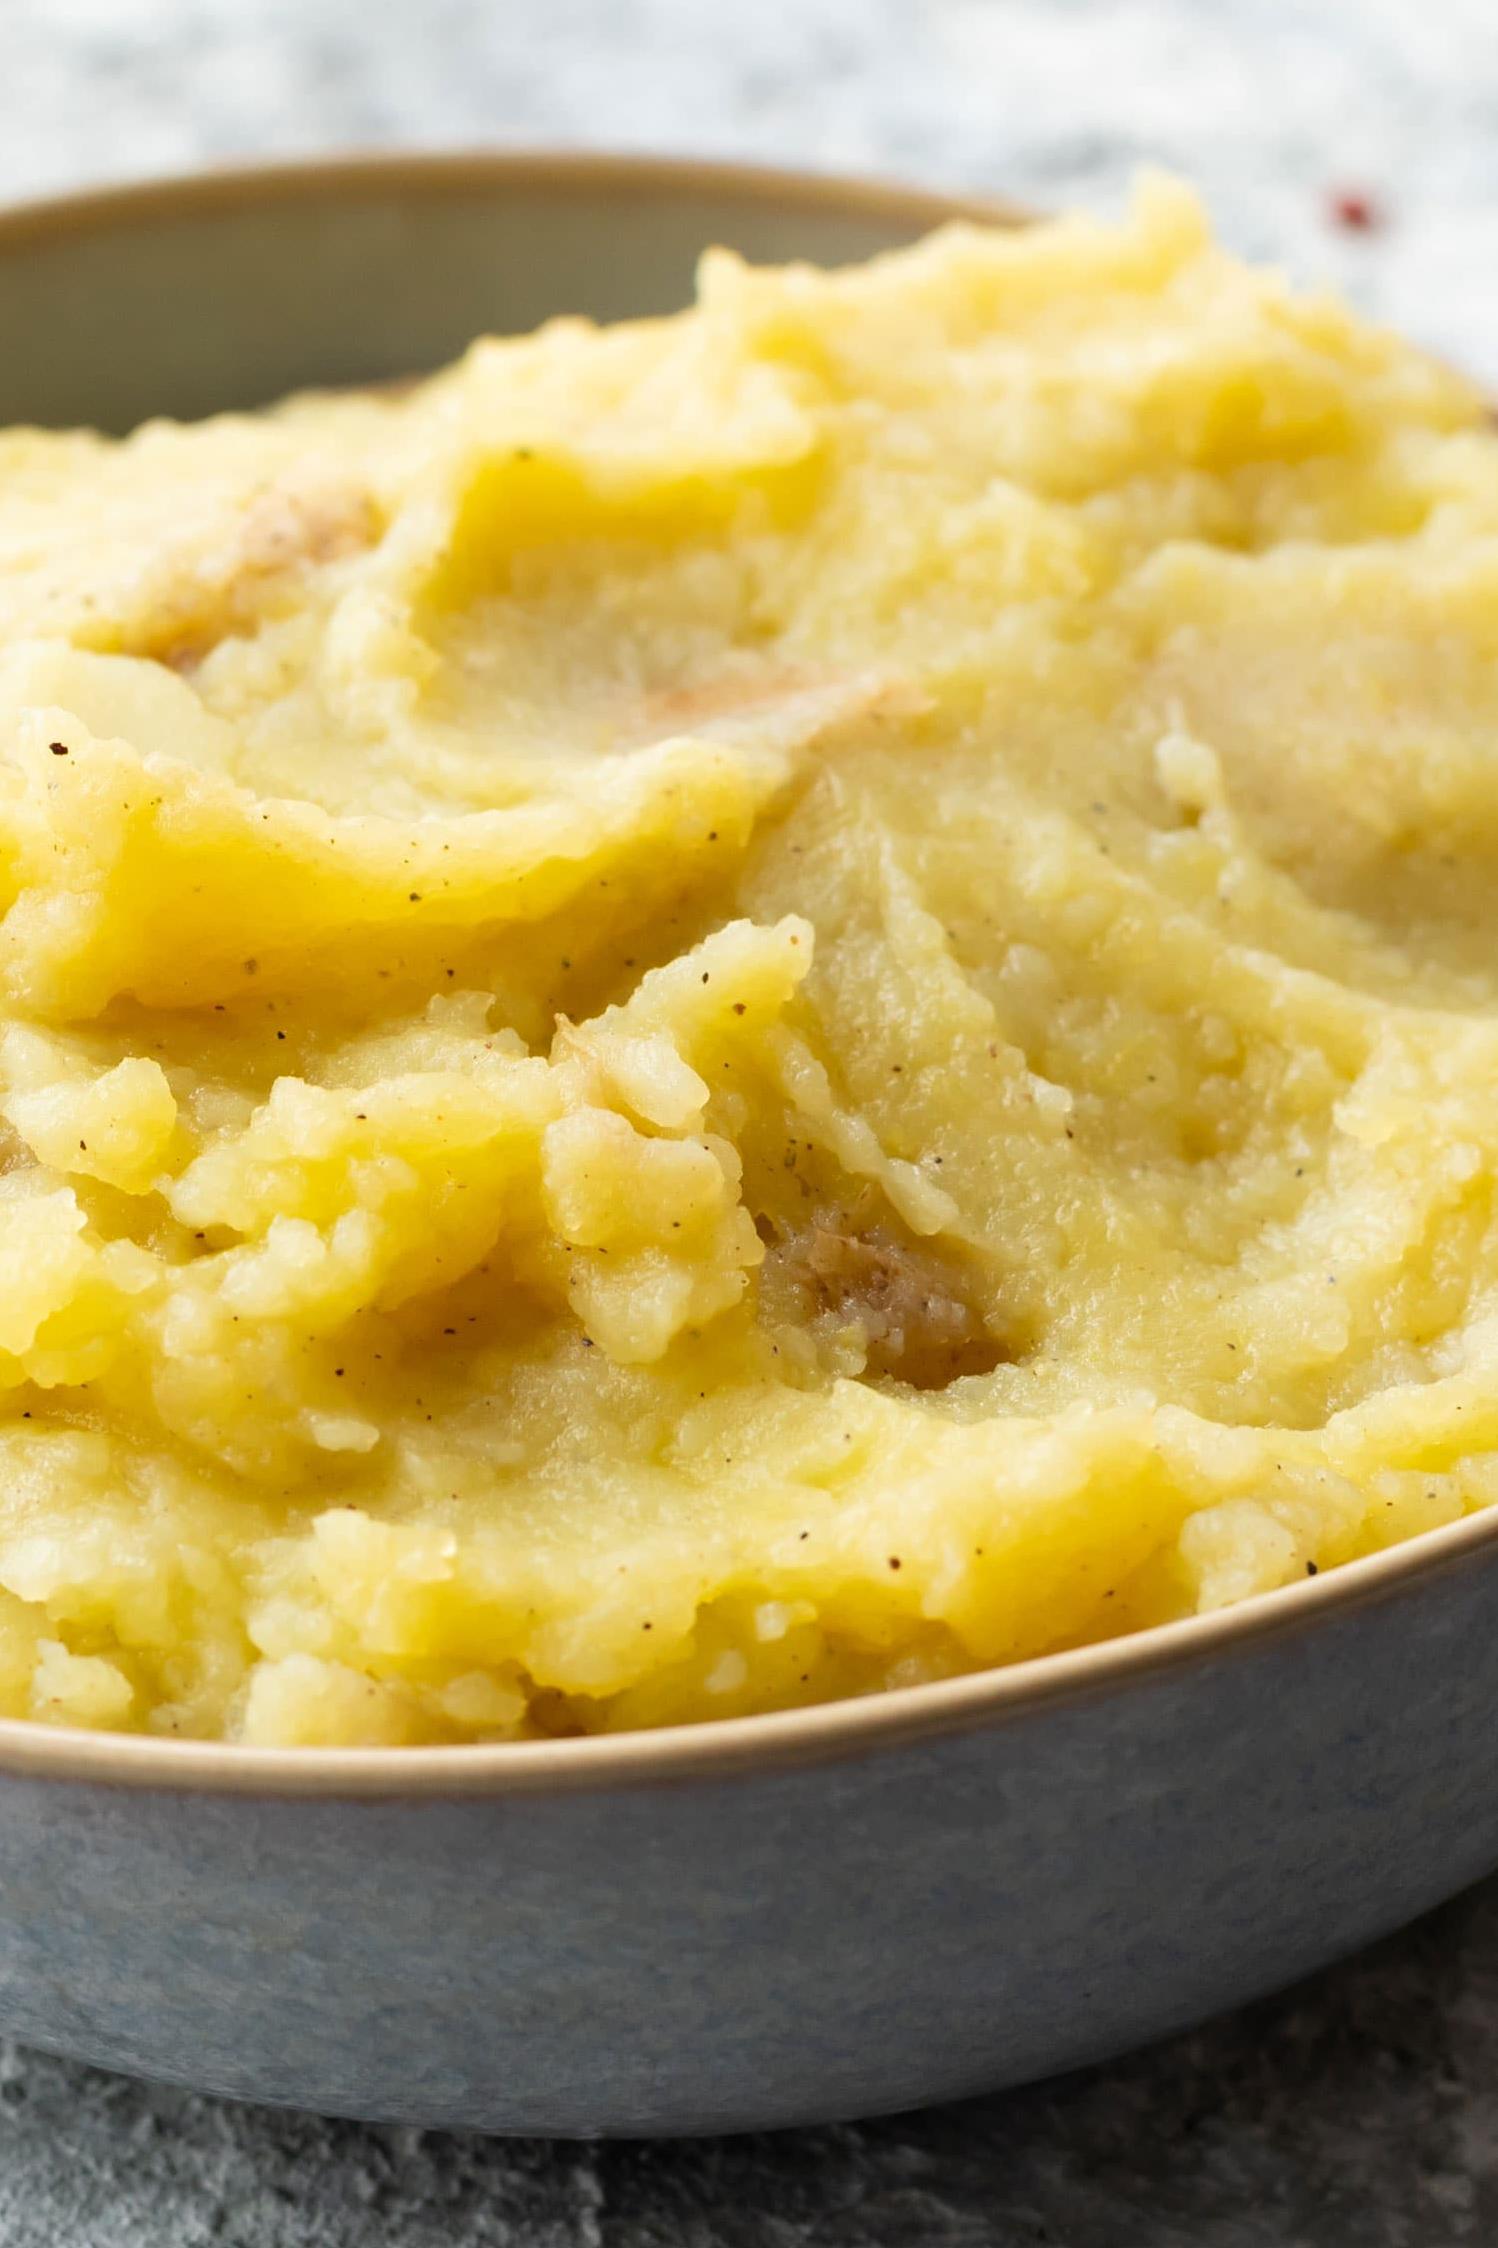  Vegan-friendly mashed potatoes that taste just as good as the original